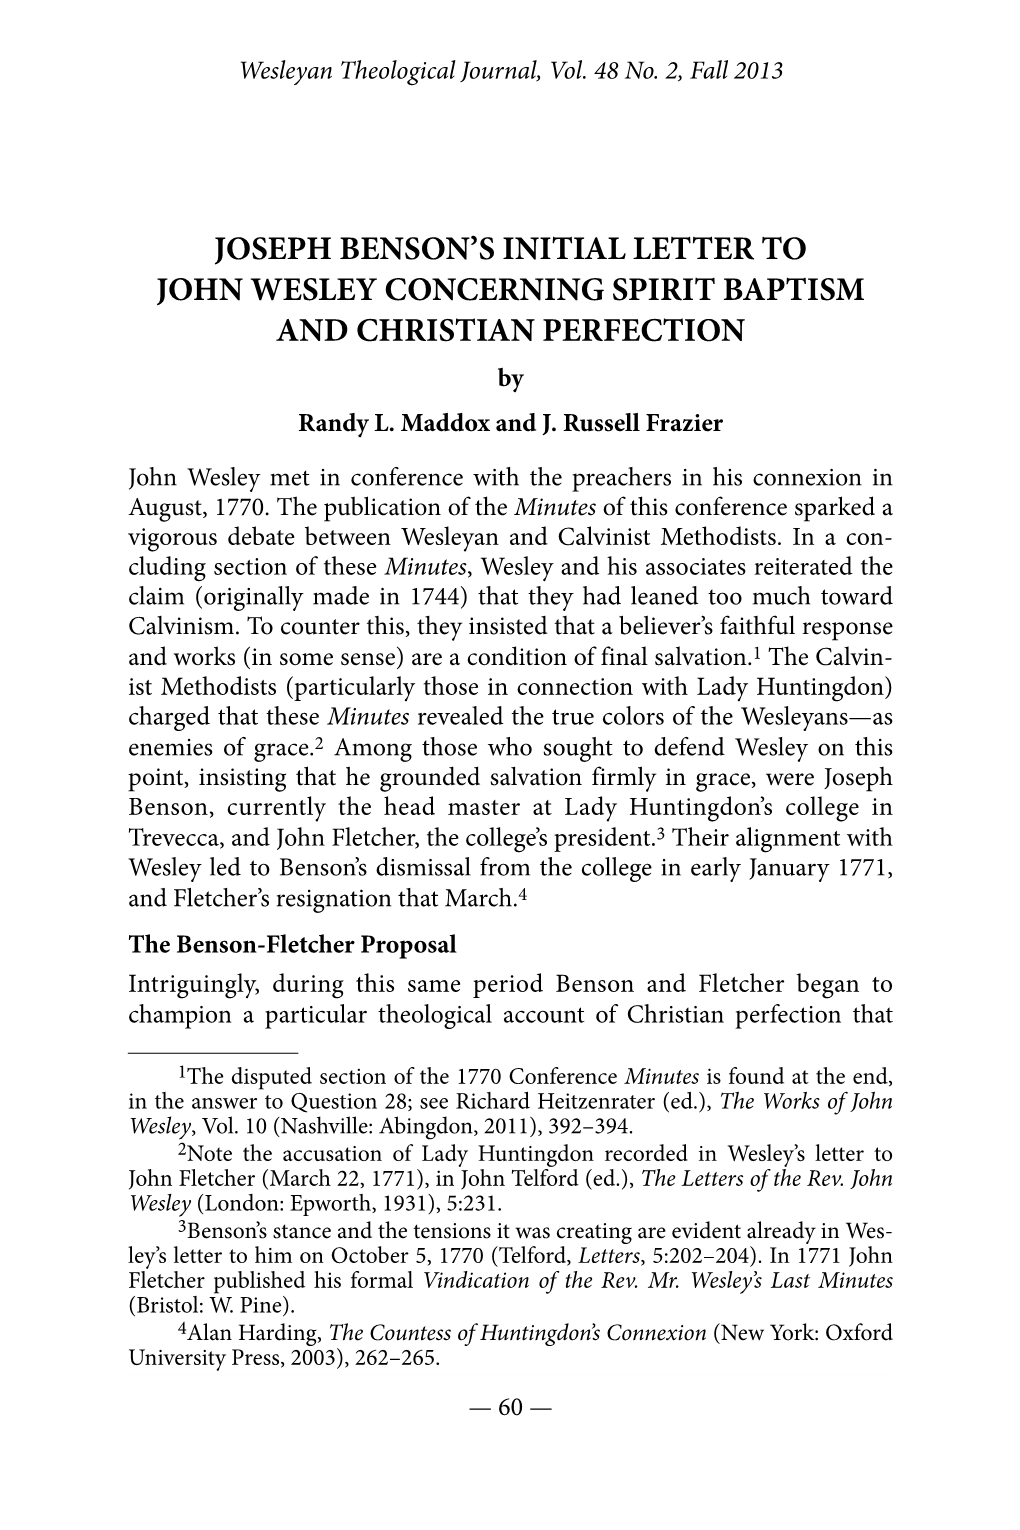 Joseph Benson's Initial Letter to John Wesley Concerning